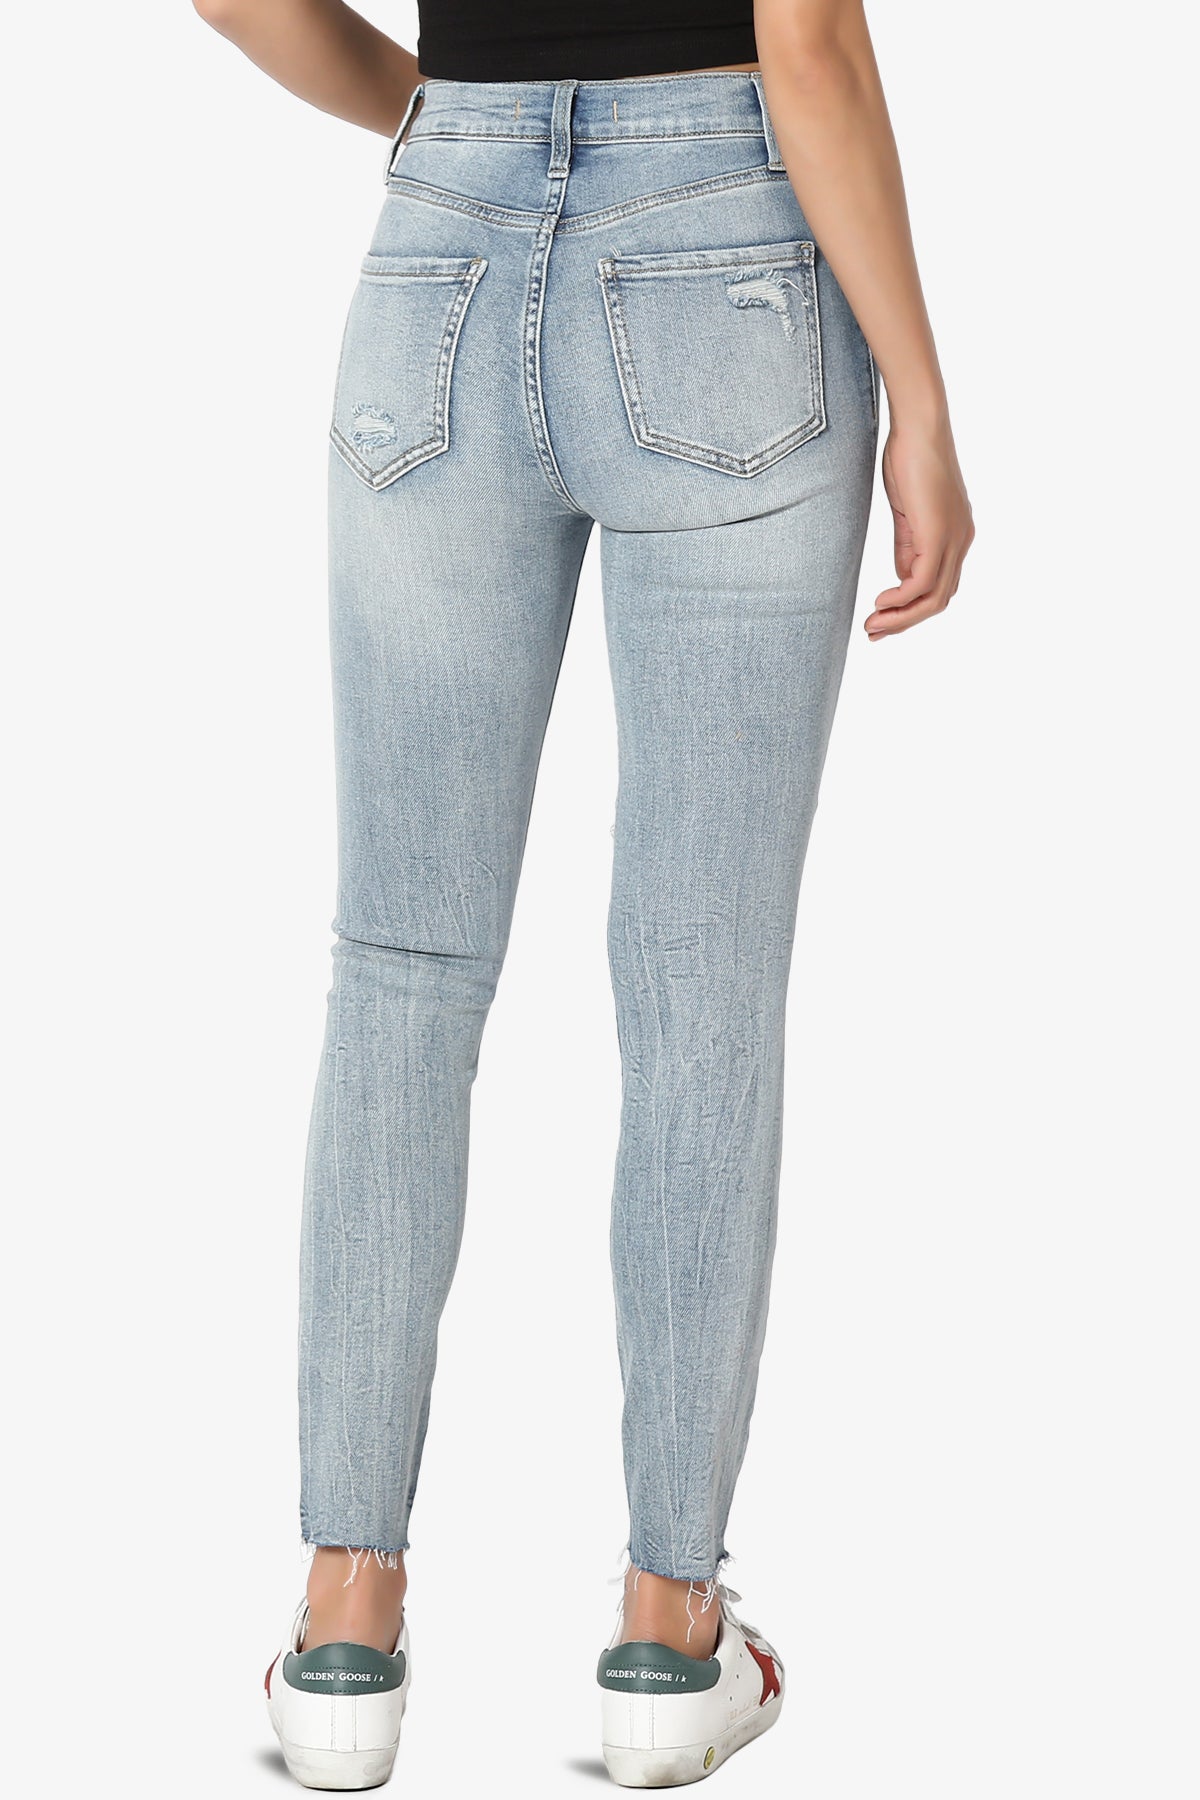 Bella Super High Rise Crop Skinny Jeans in Genesis LT